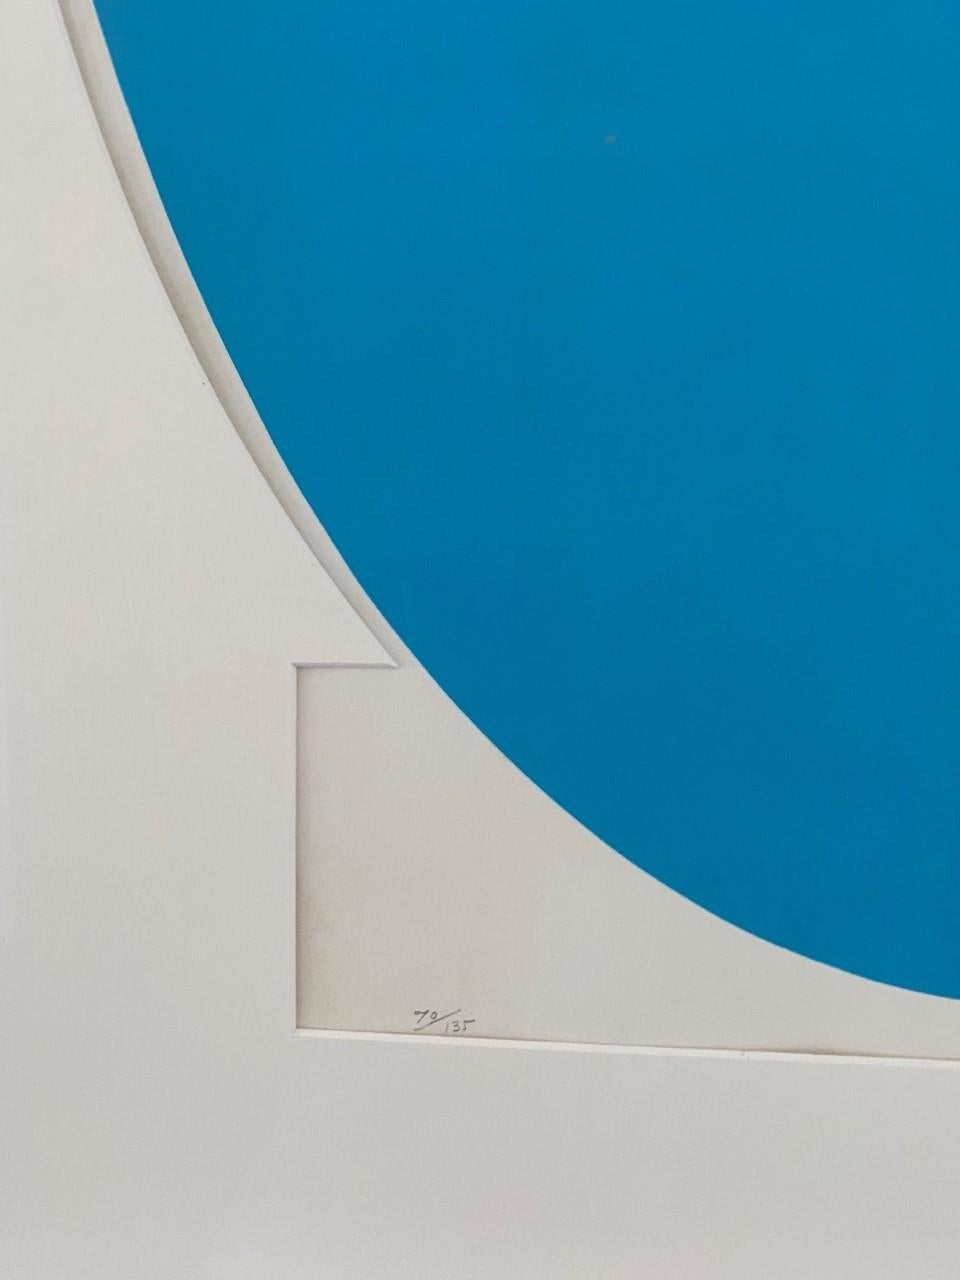 Pressed Ilya Bolotowsky Signed Modernist Silkscreen Vertical Blue Ellipse Series For Sale